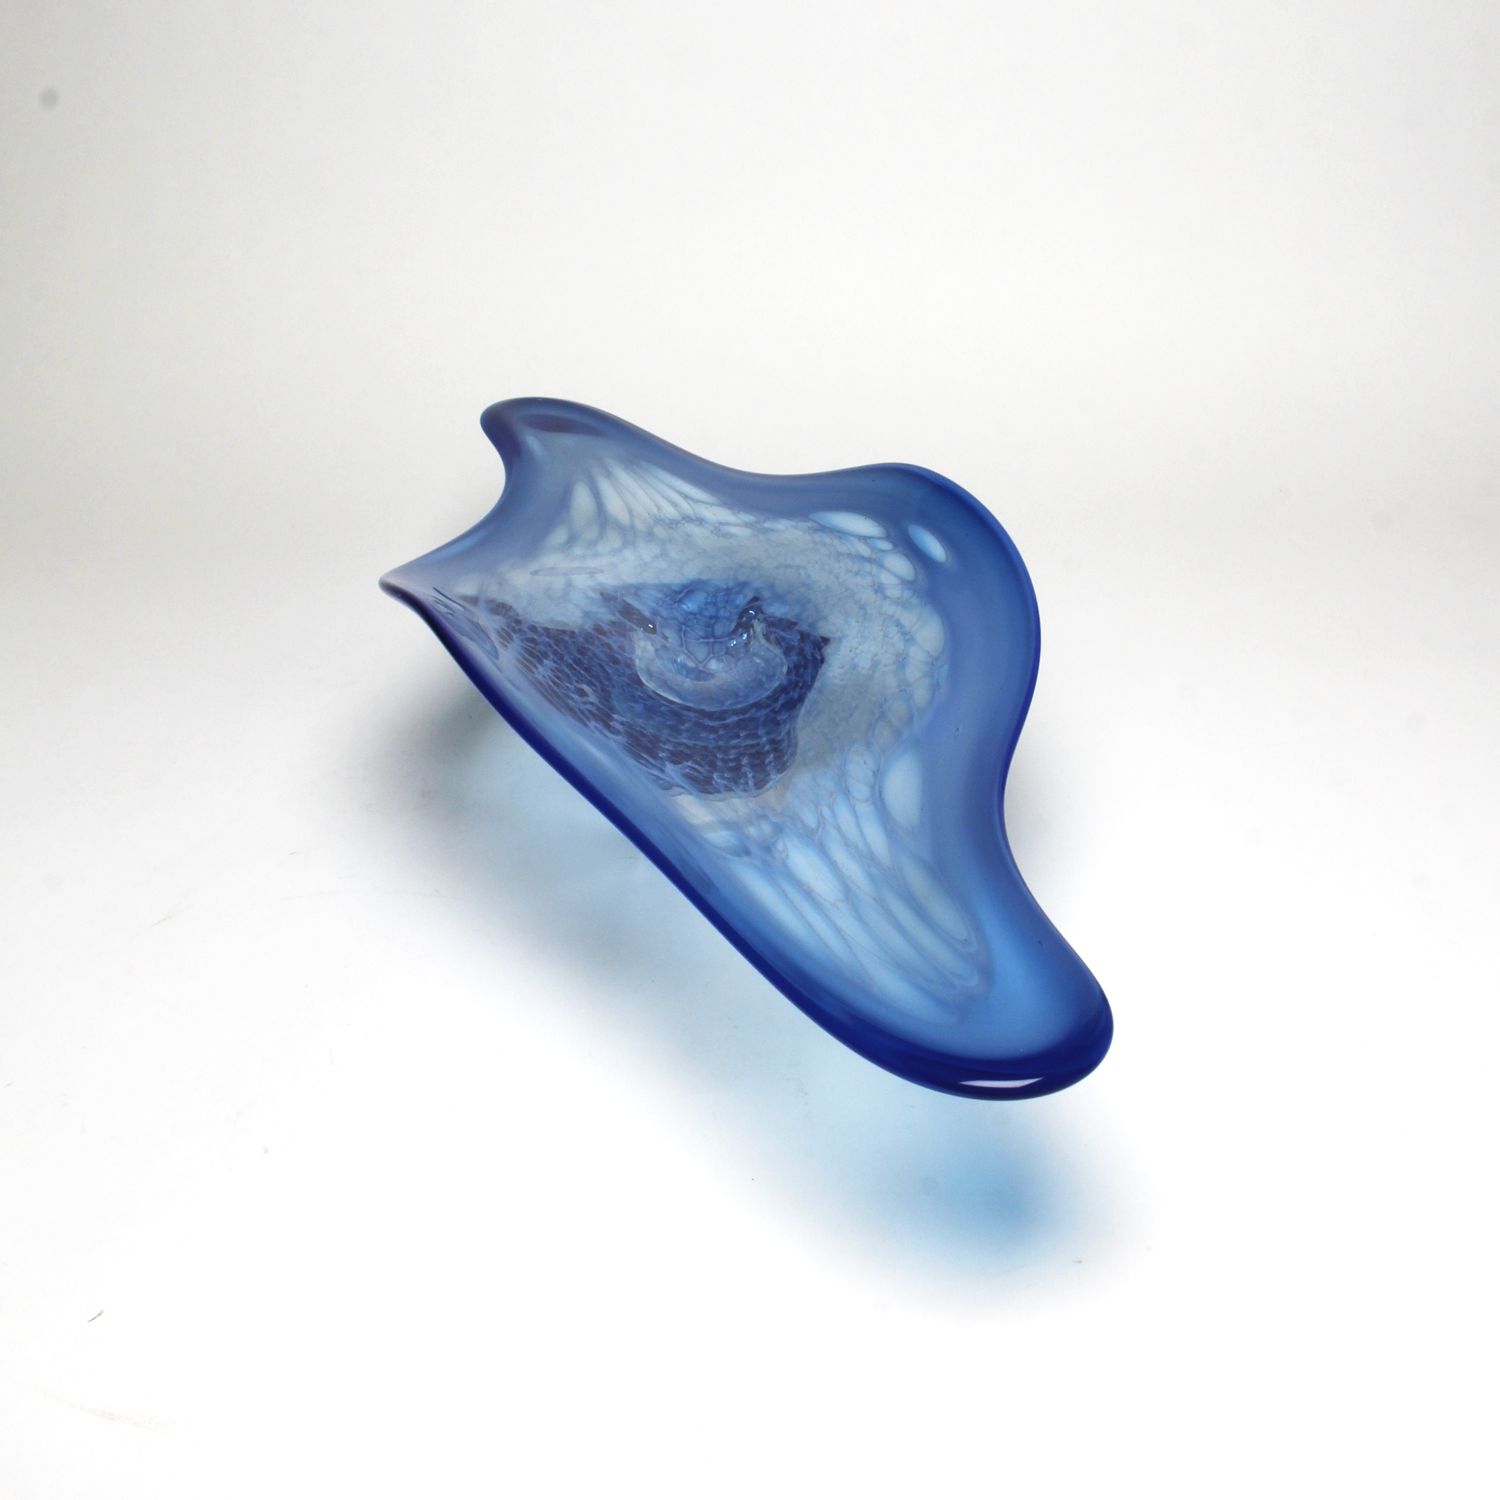 James Wardhaugh: Manta Platter – Aqua Product Image 1 of 6